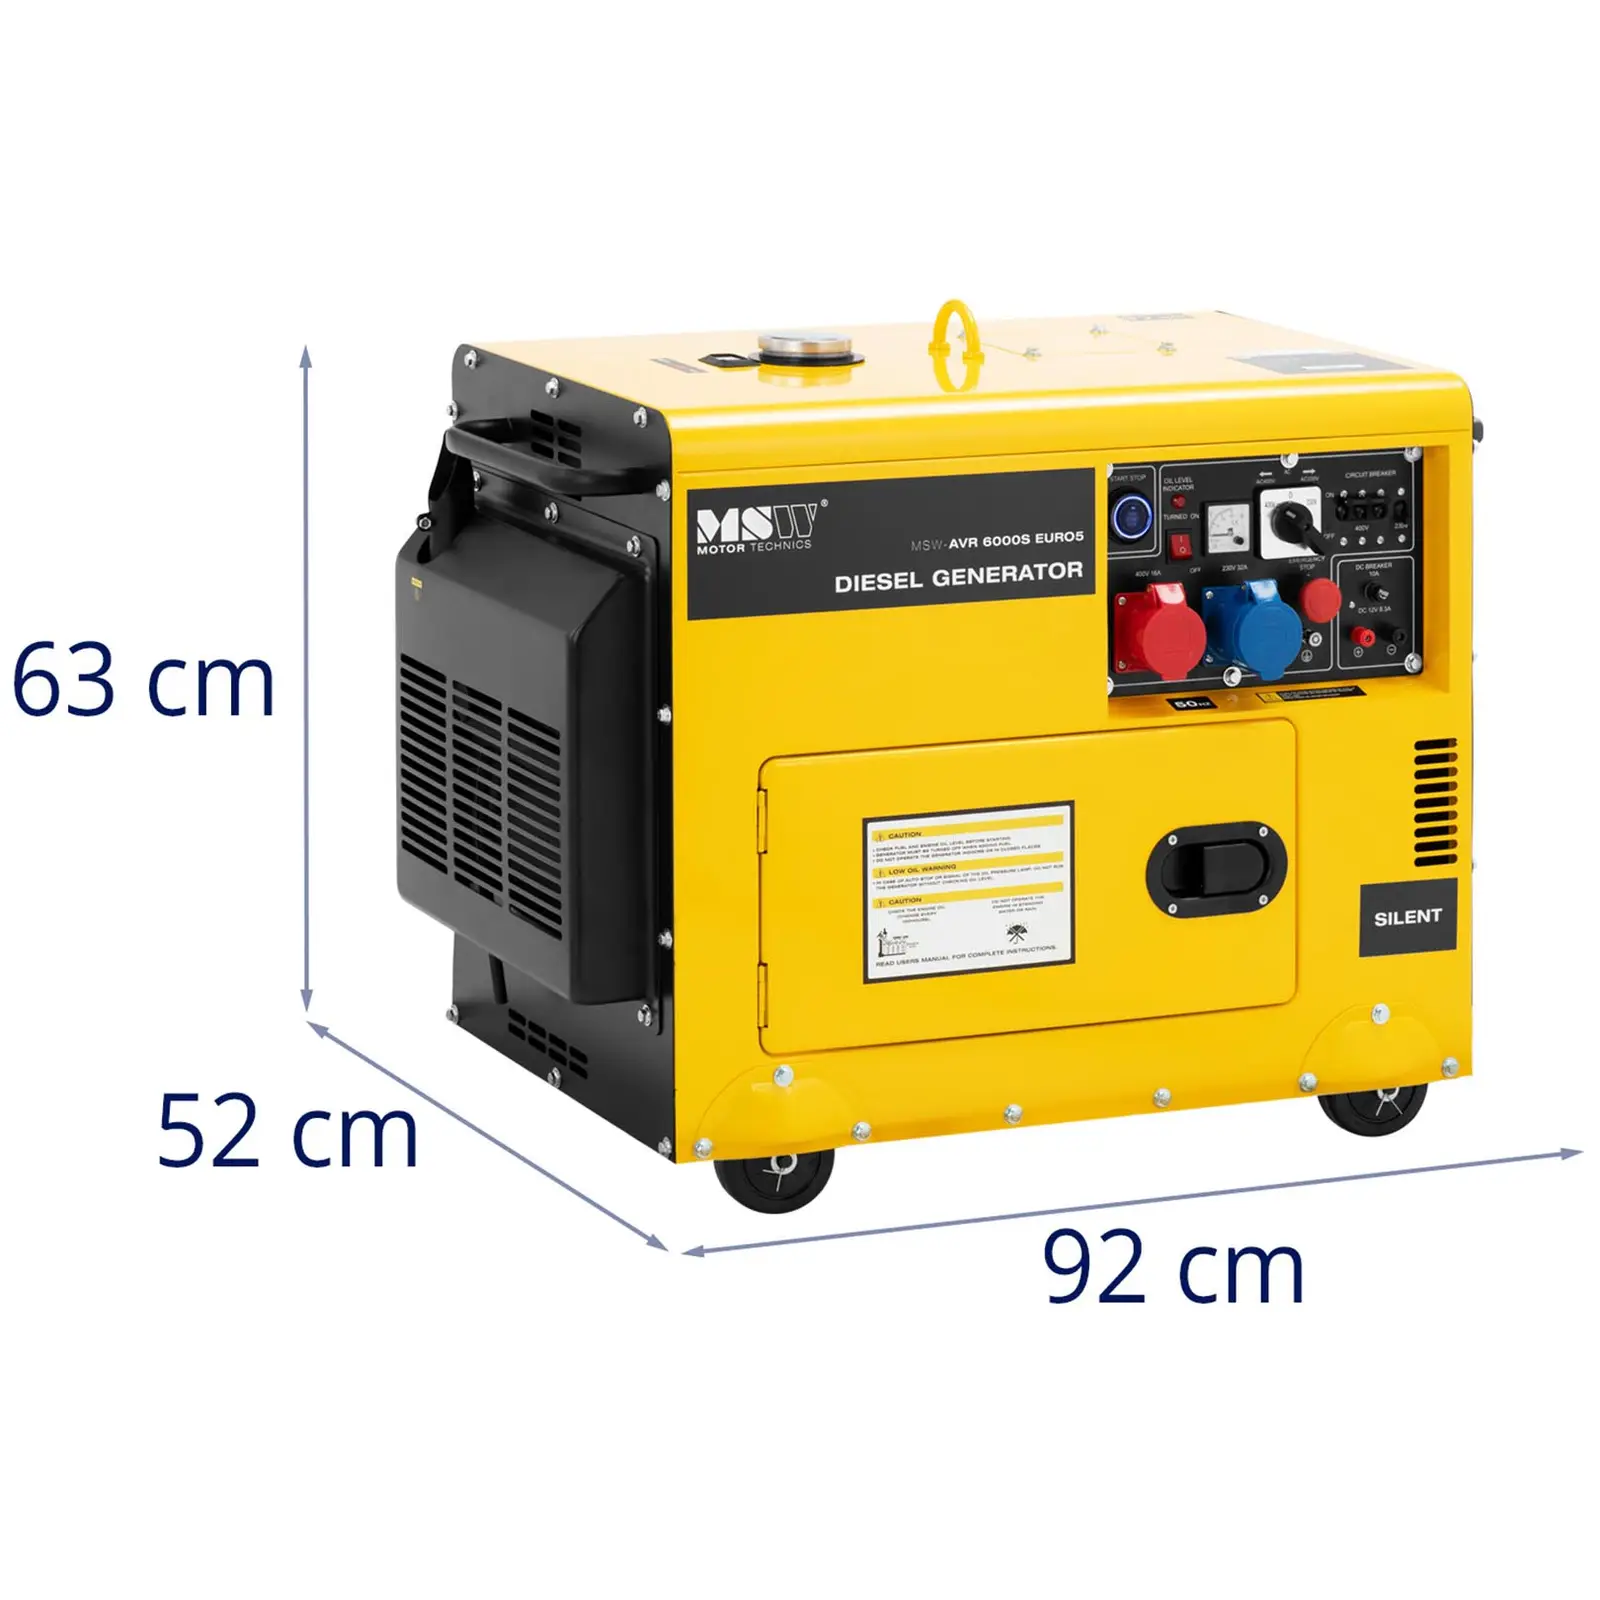 Notstromaggregat Diesel - 5100 / 6000 W - 16 L - 240/400 V - mobil - AVR - Euro 5